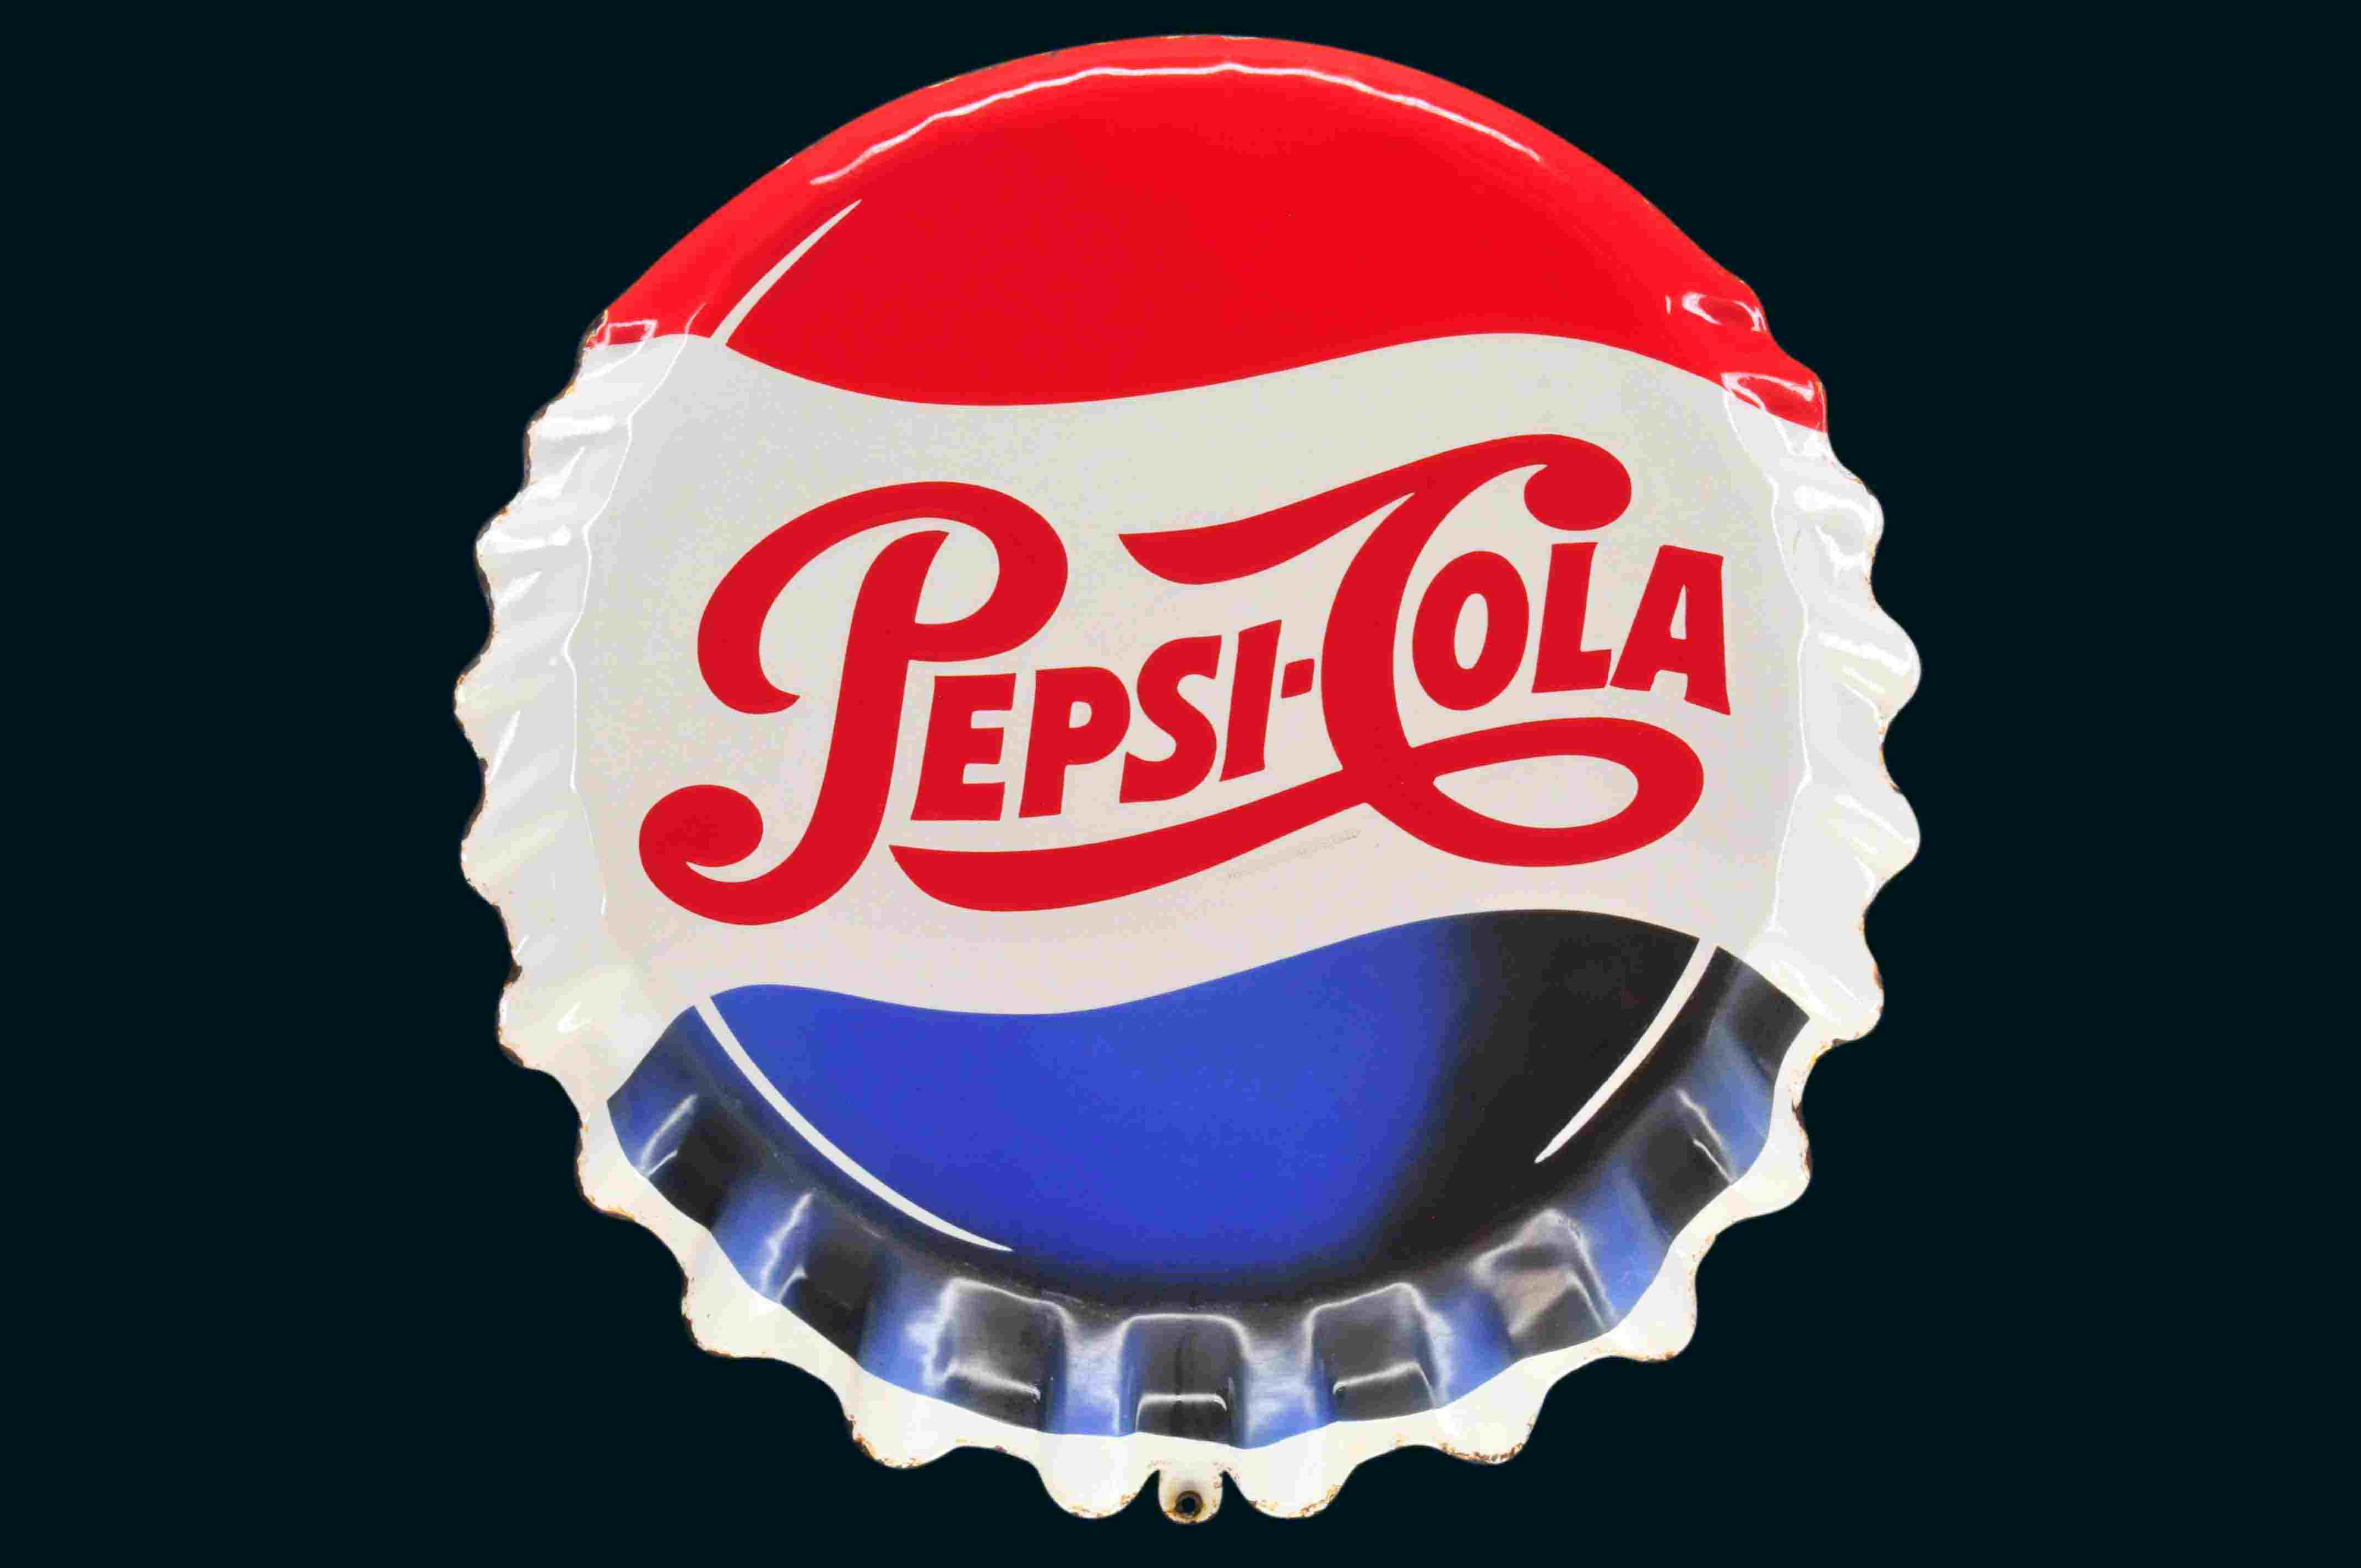 Pepsi-Cola 